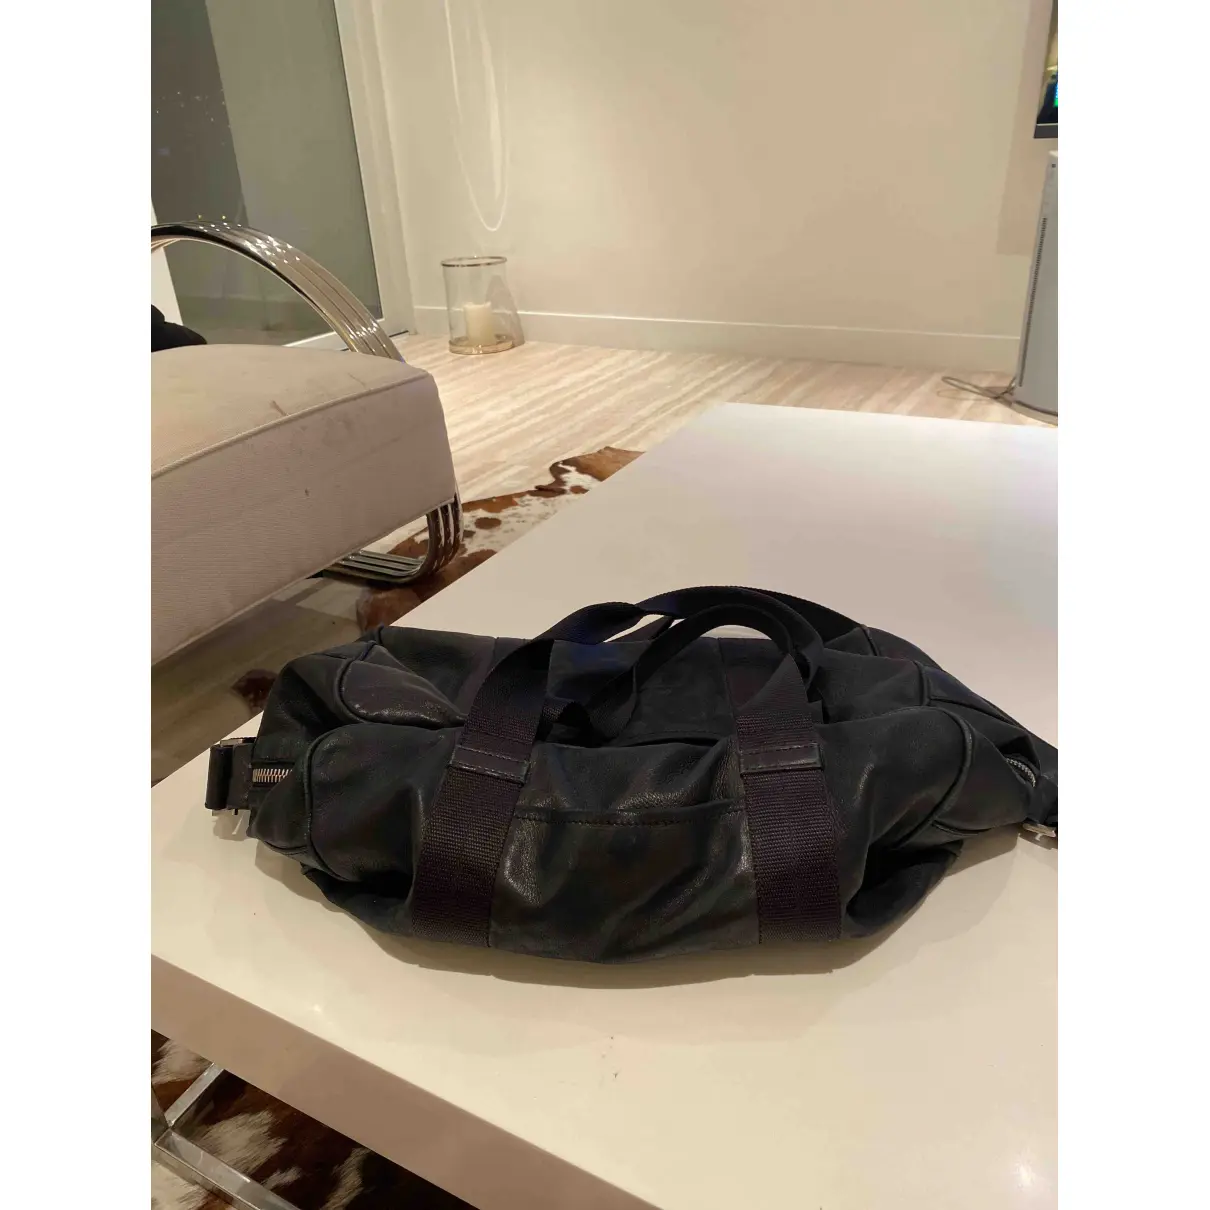 Buy Prada Leather travel bag online